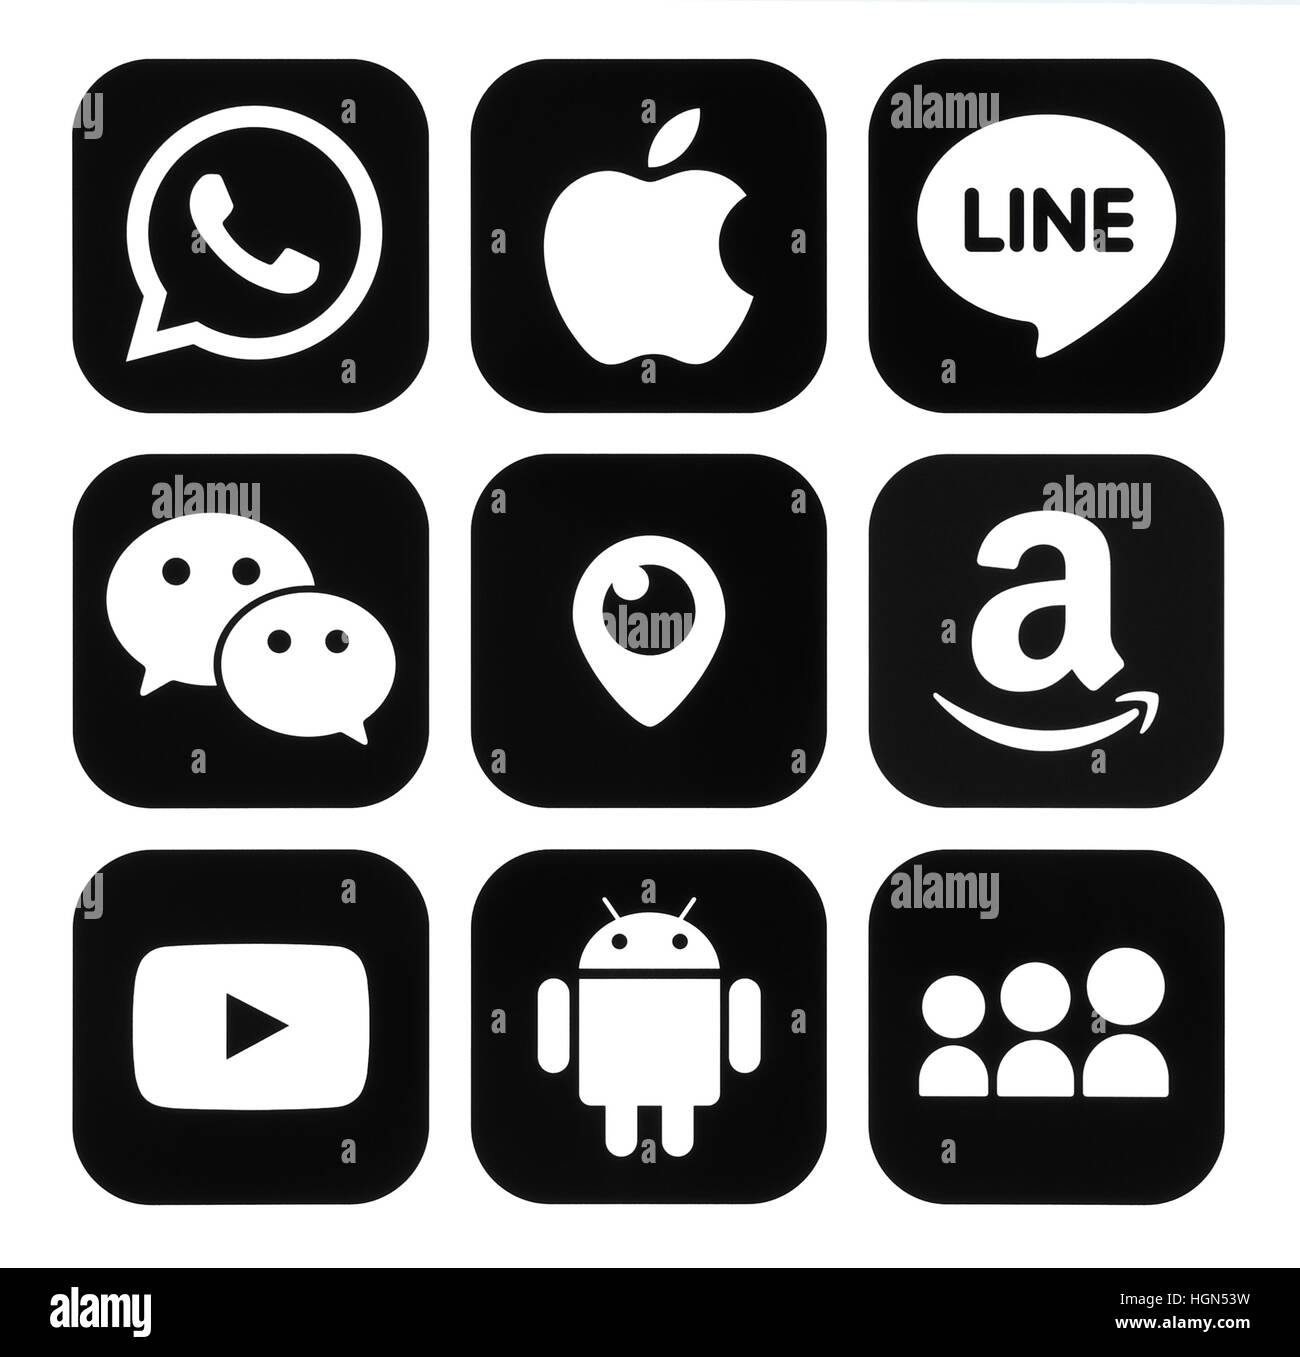 Samsung logo - Social media & Logos Icons